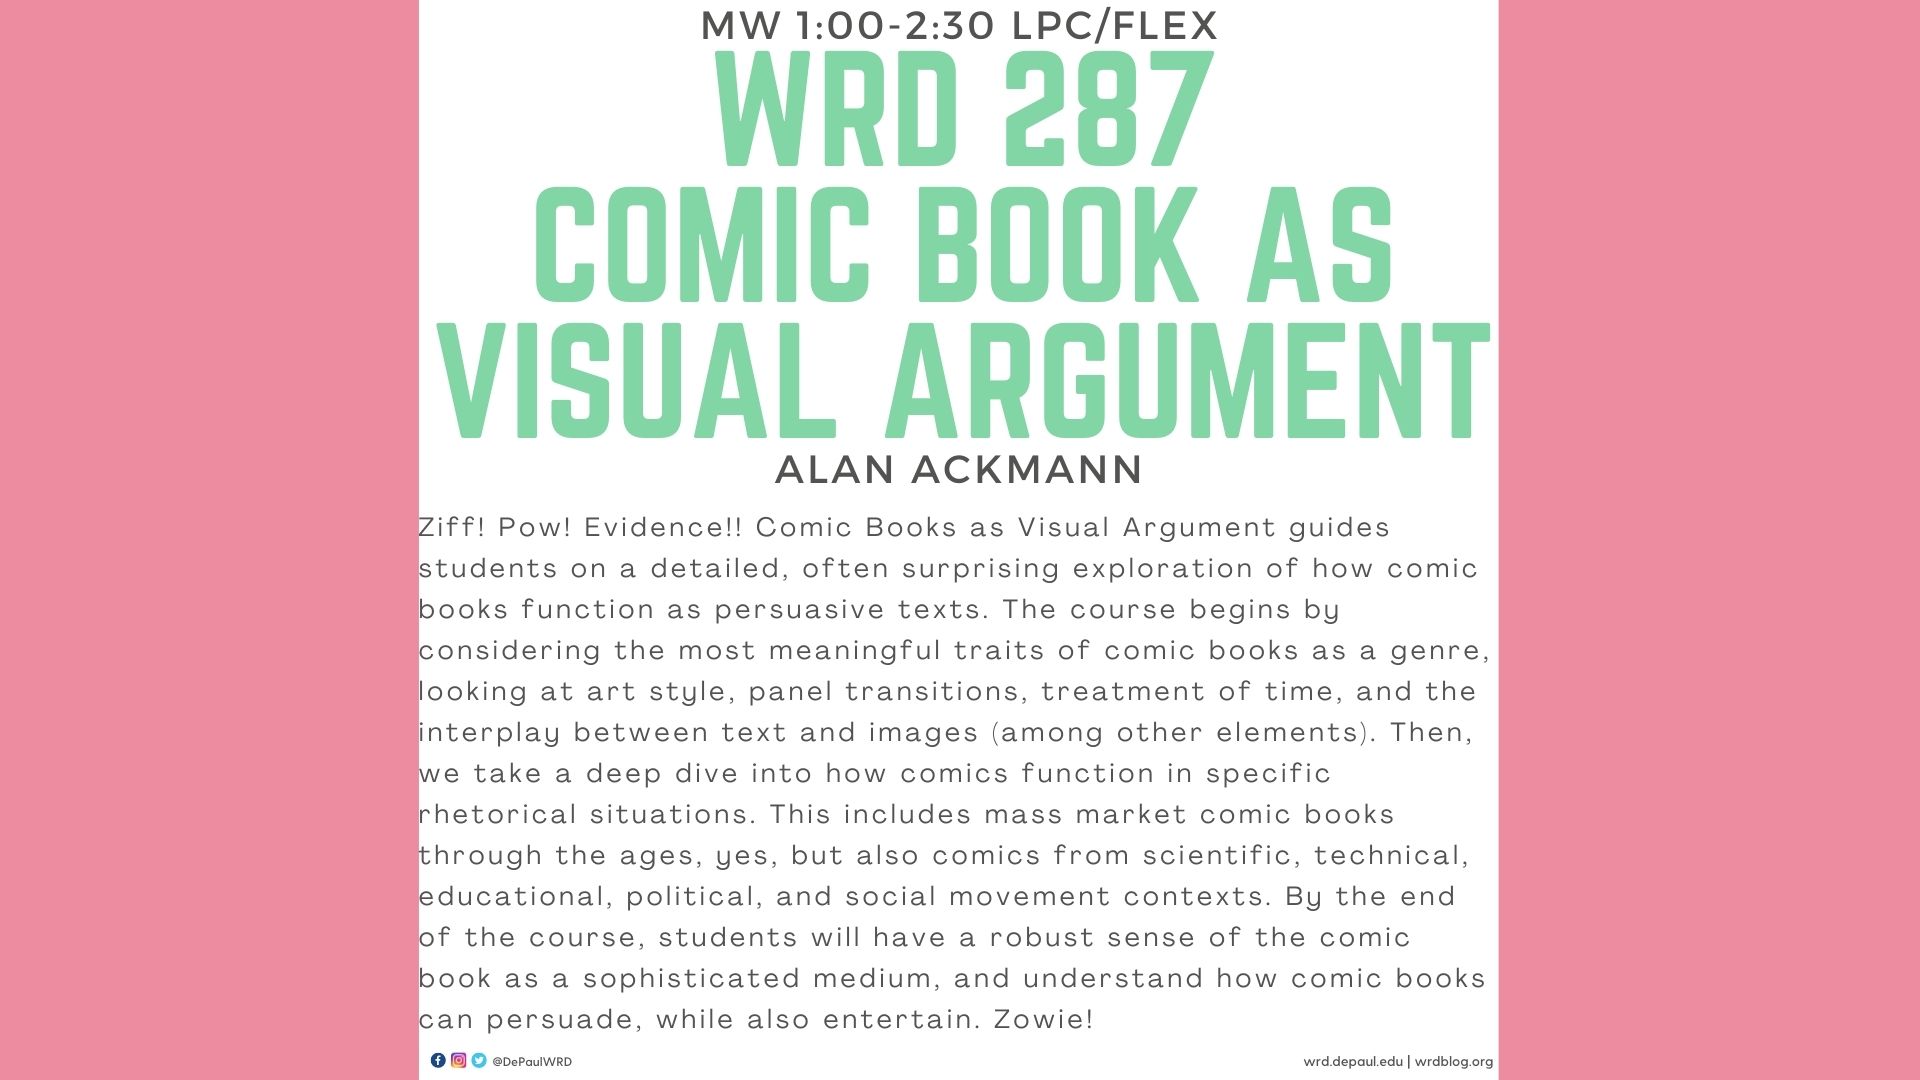 WRD 287 Comic Book as Visual Argument